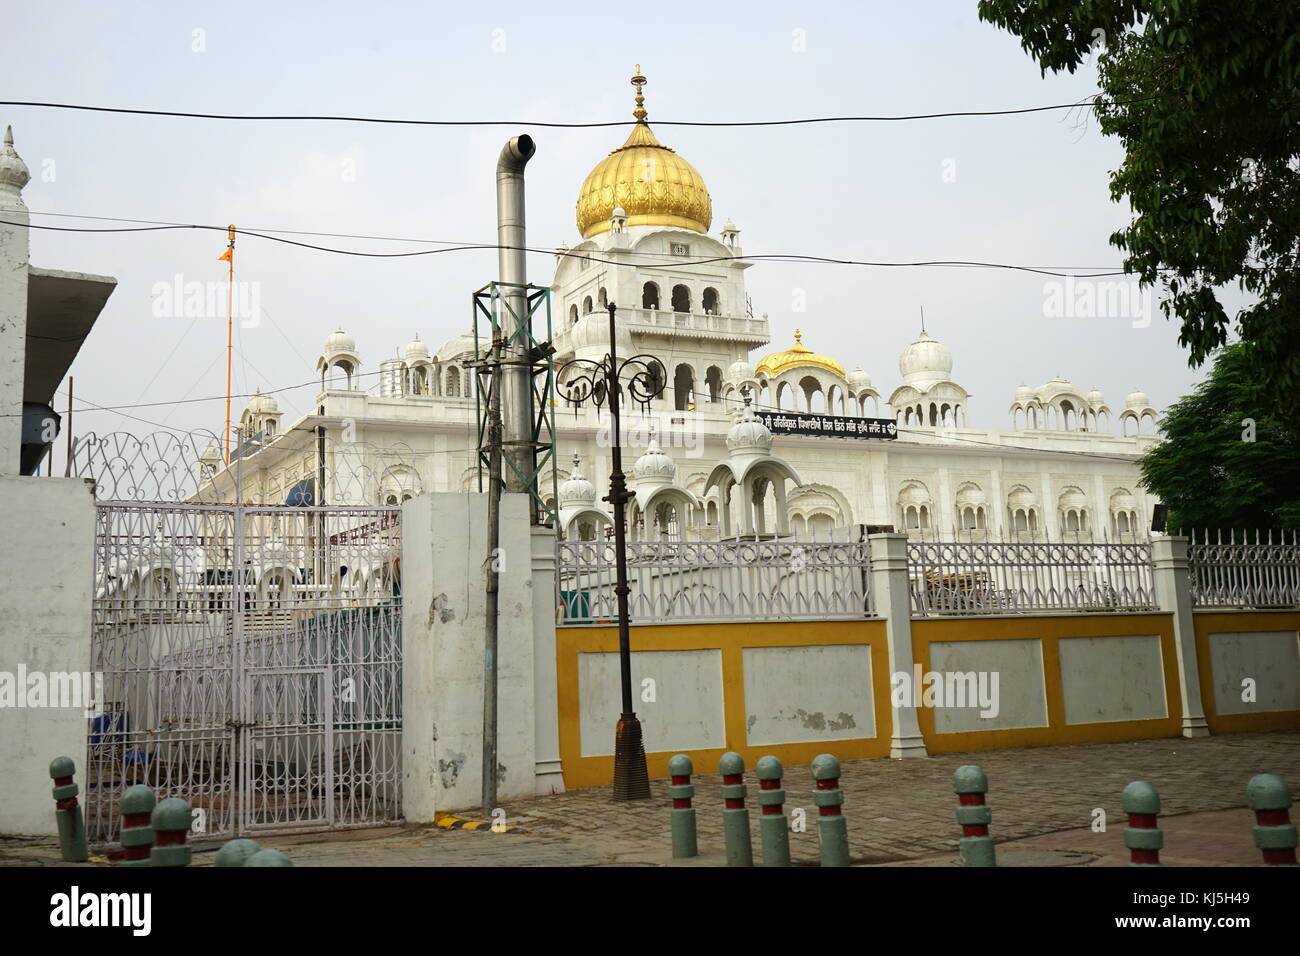 Gurudwara Bangla Sahib; is one of the most prominent Sikh gurdwara, or Sikh house of worship, in Delhi Stock Photo